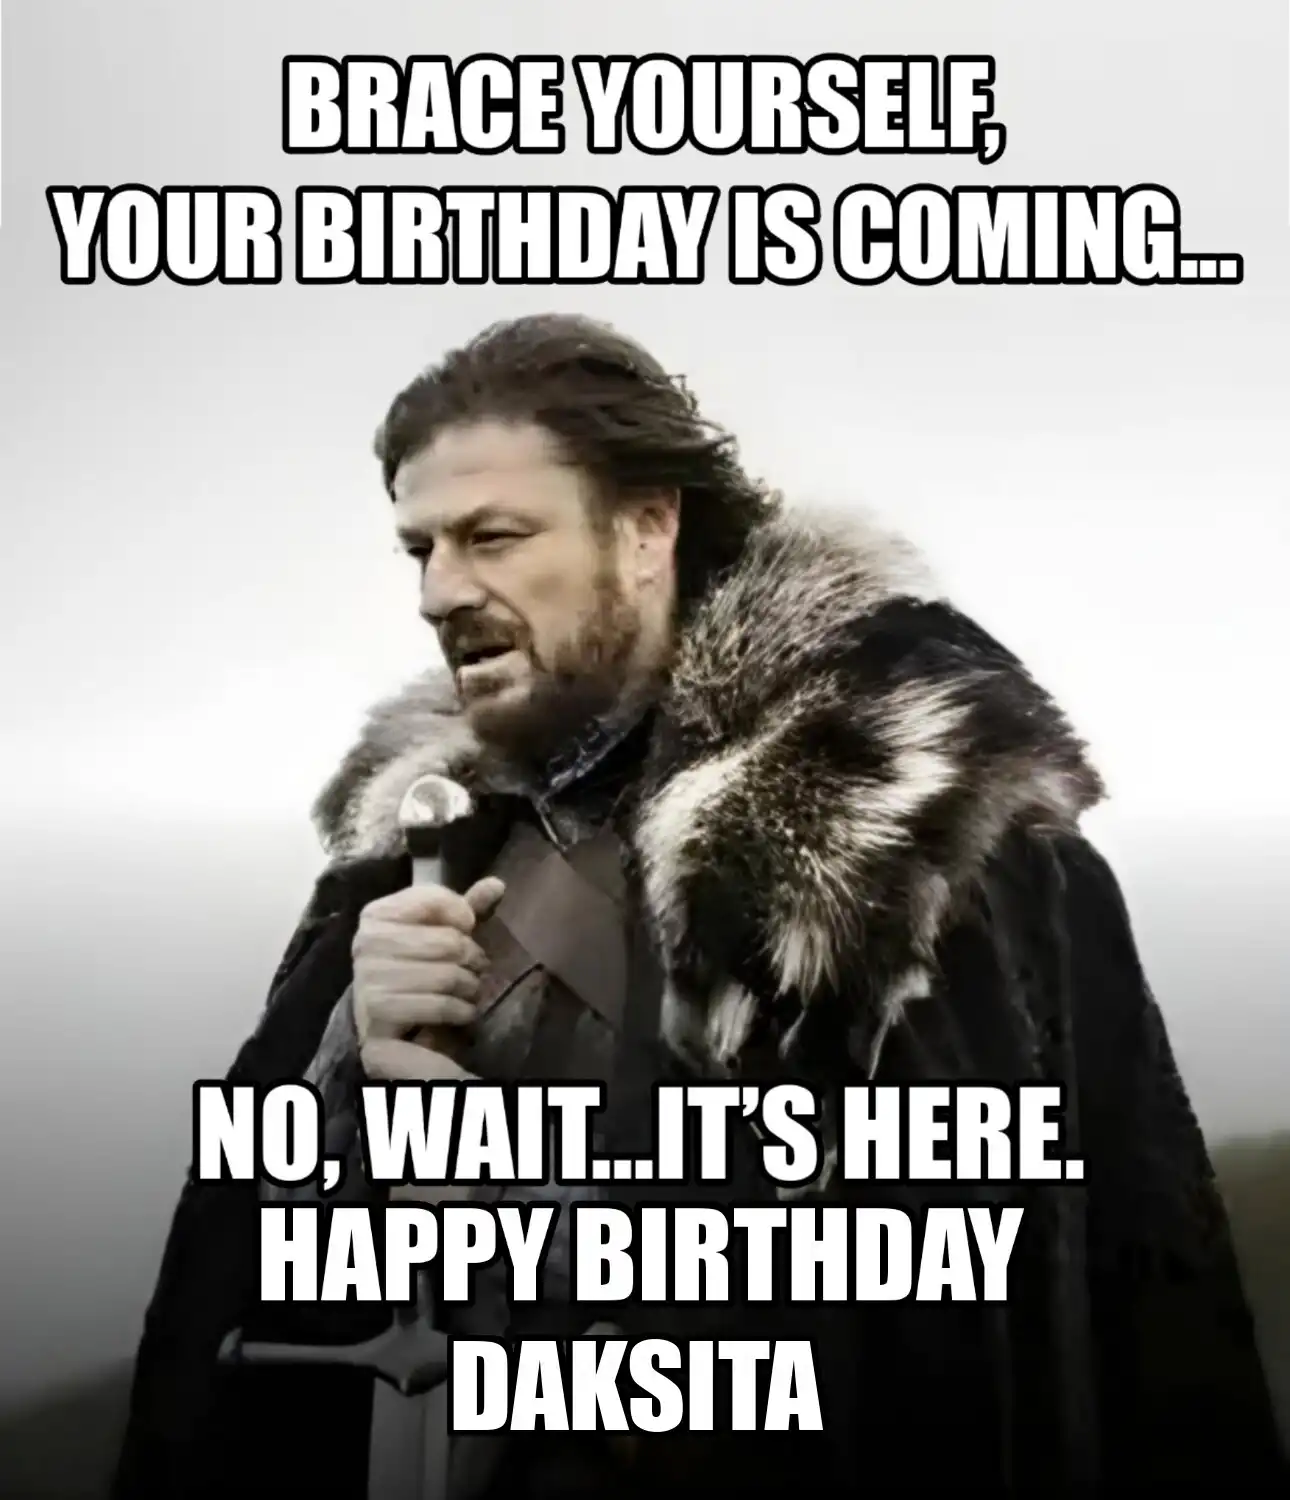 Happy Birthday Daksita Brace Yourself Your Birthday Is Coming Meme